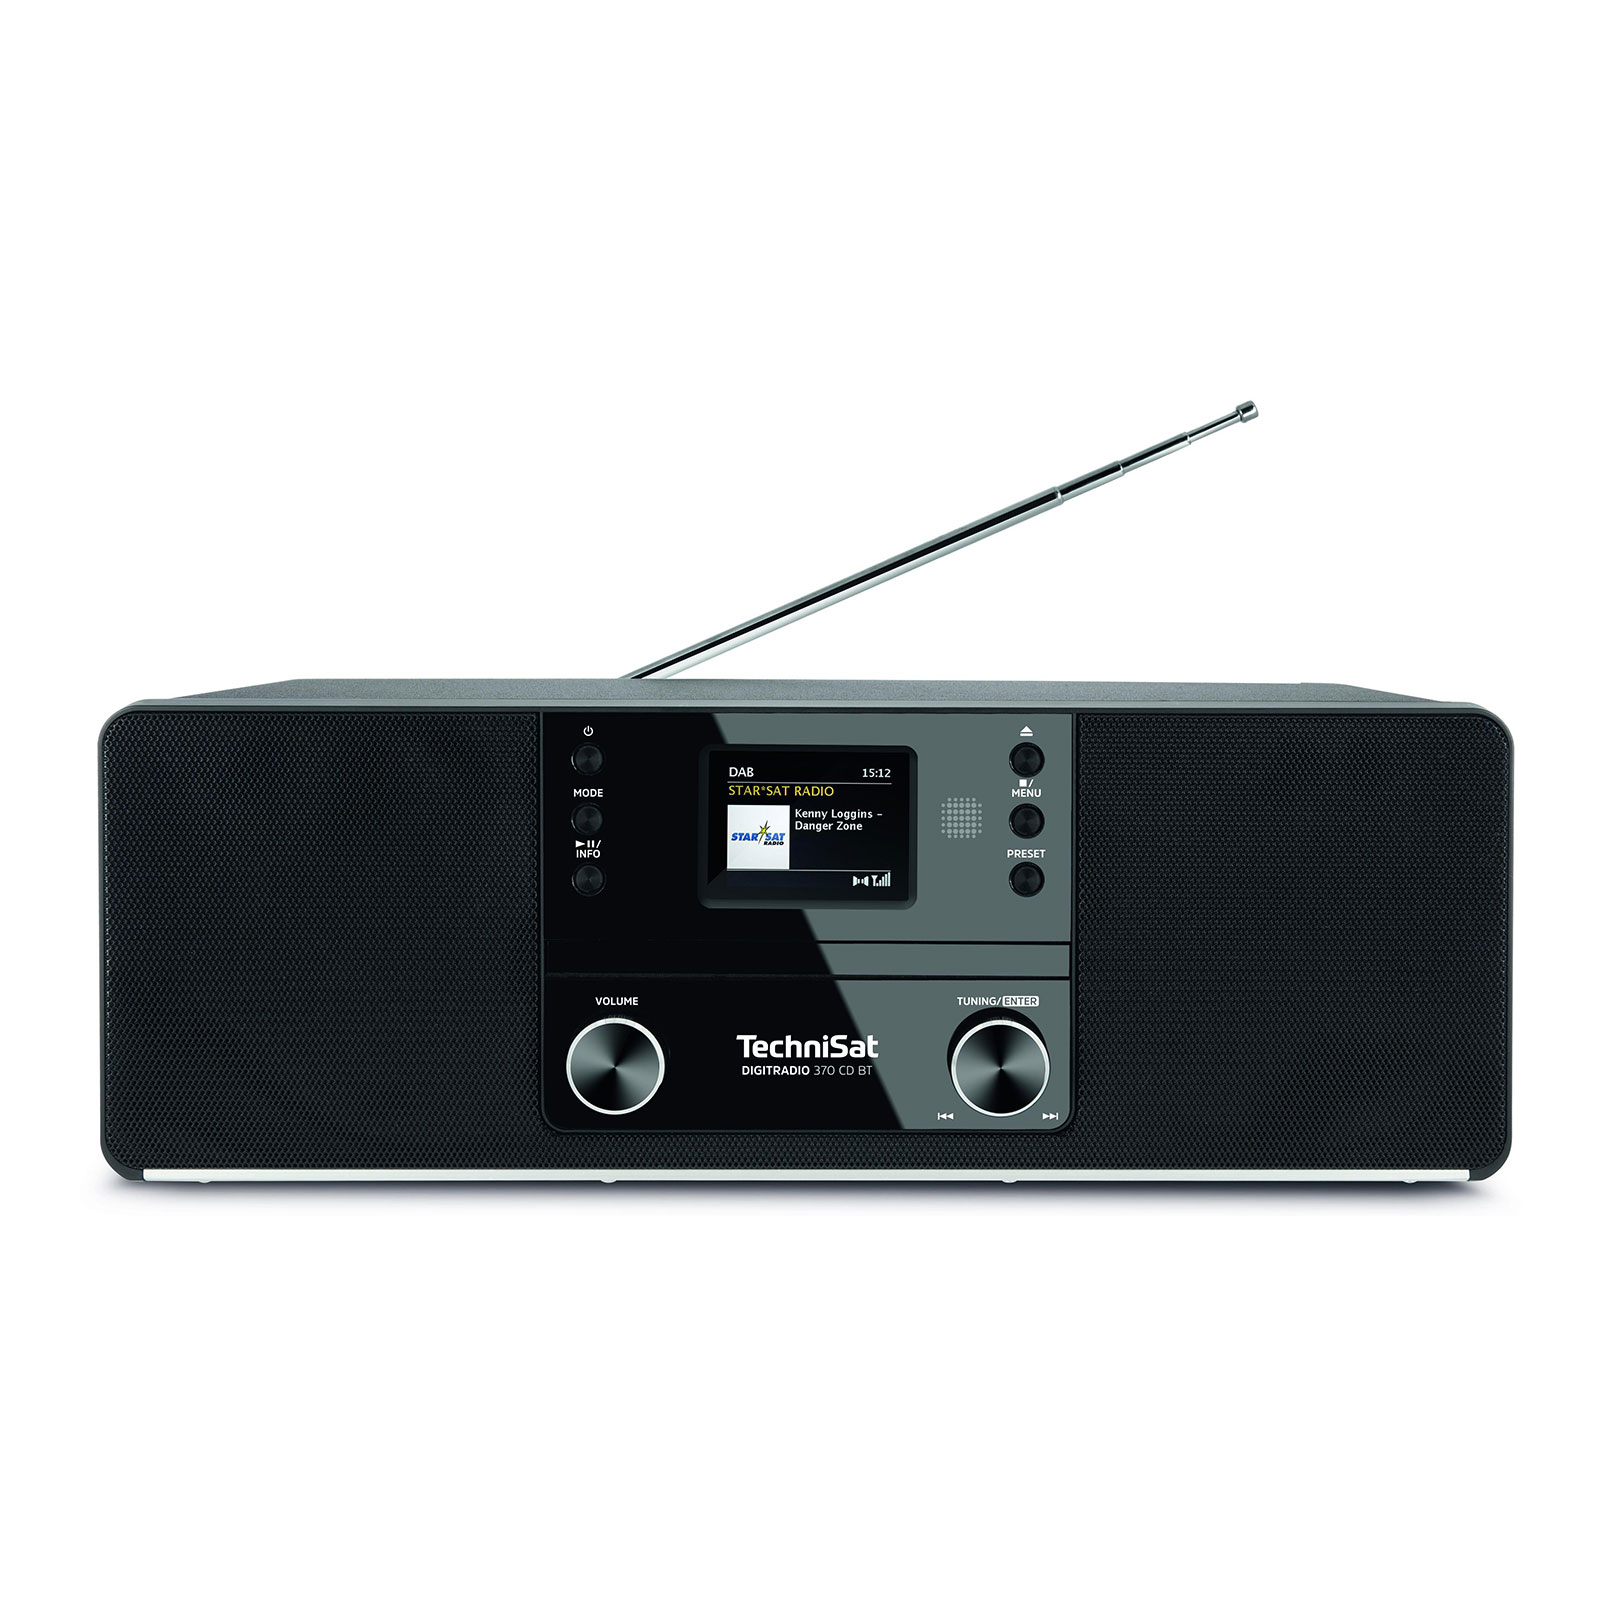 Technisat DIGITRADIO 370 CD BT schwarz DAB+ Radio